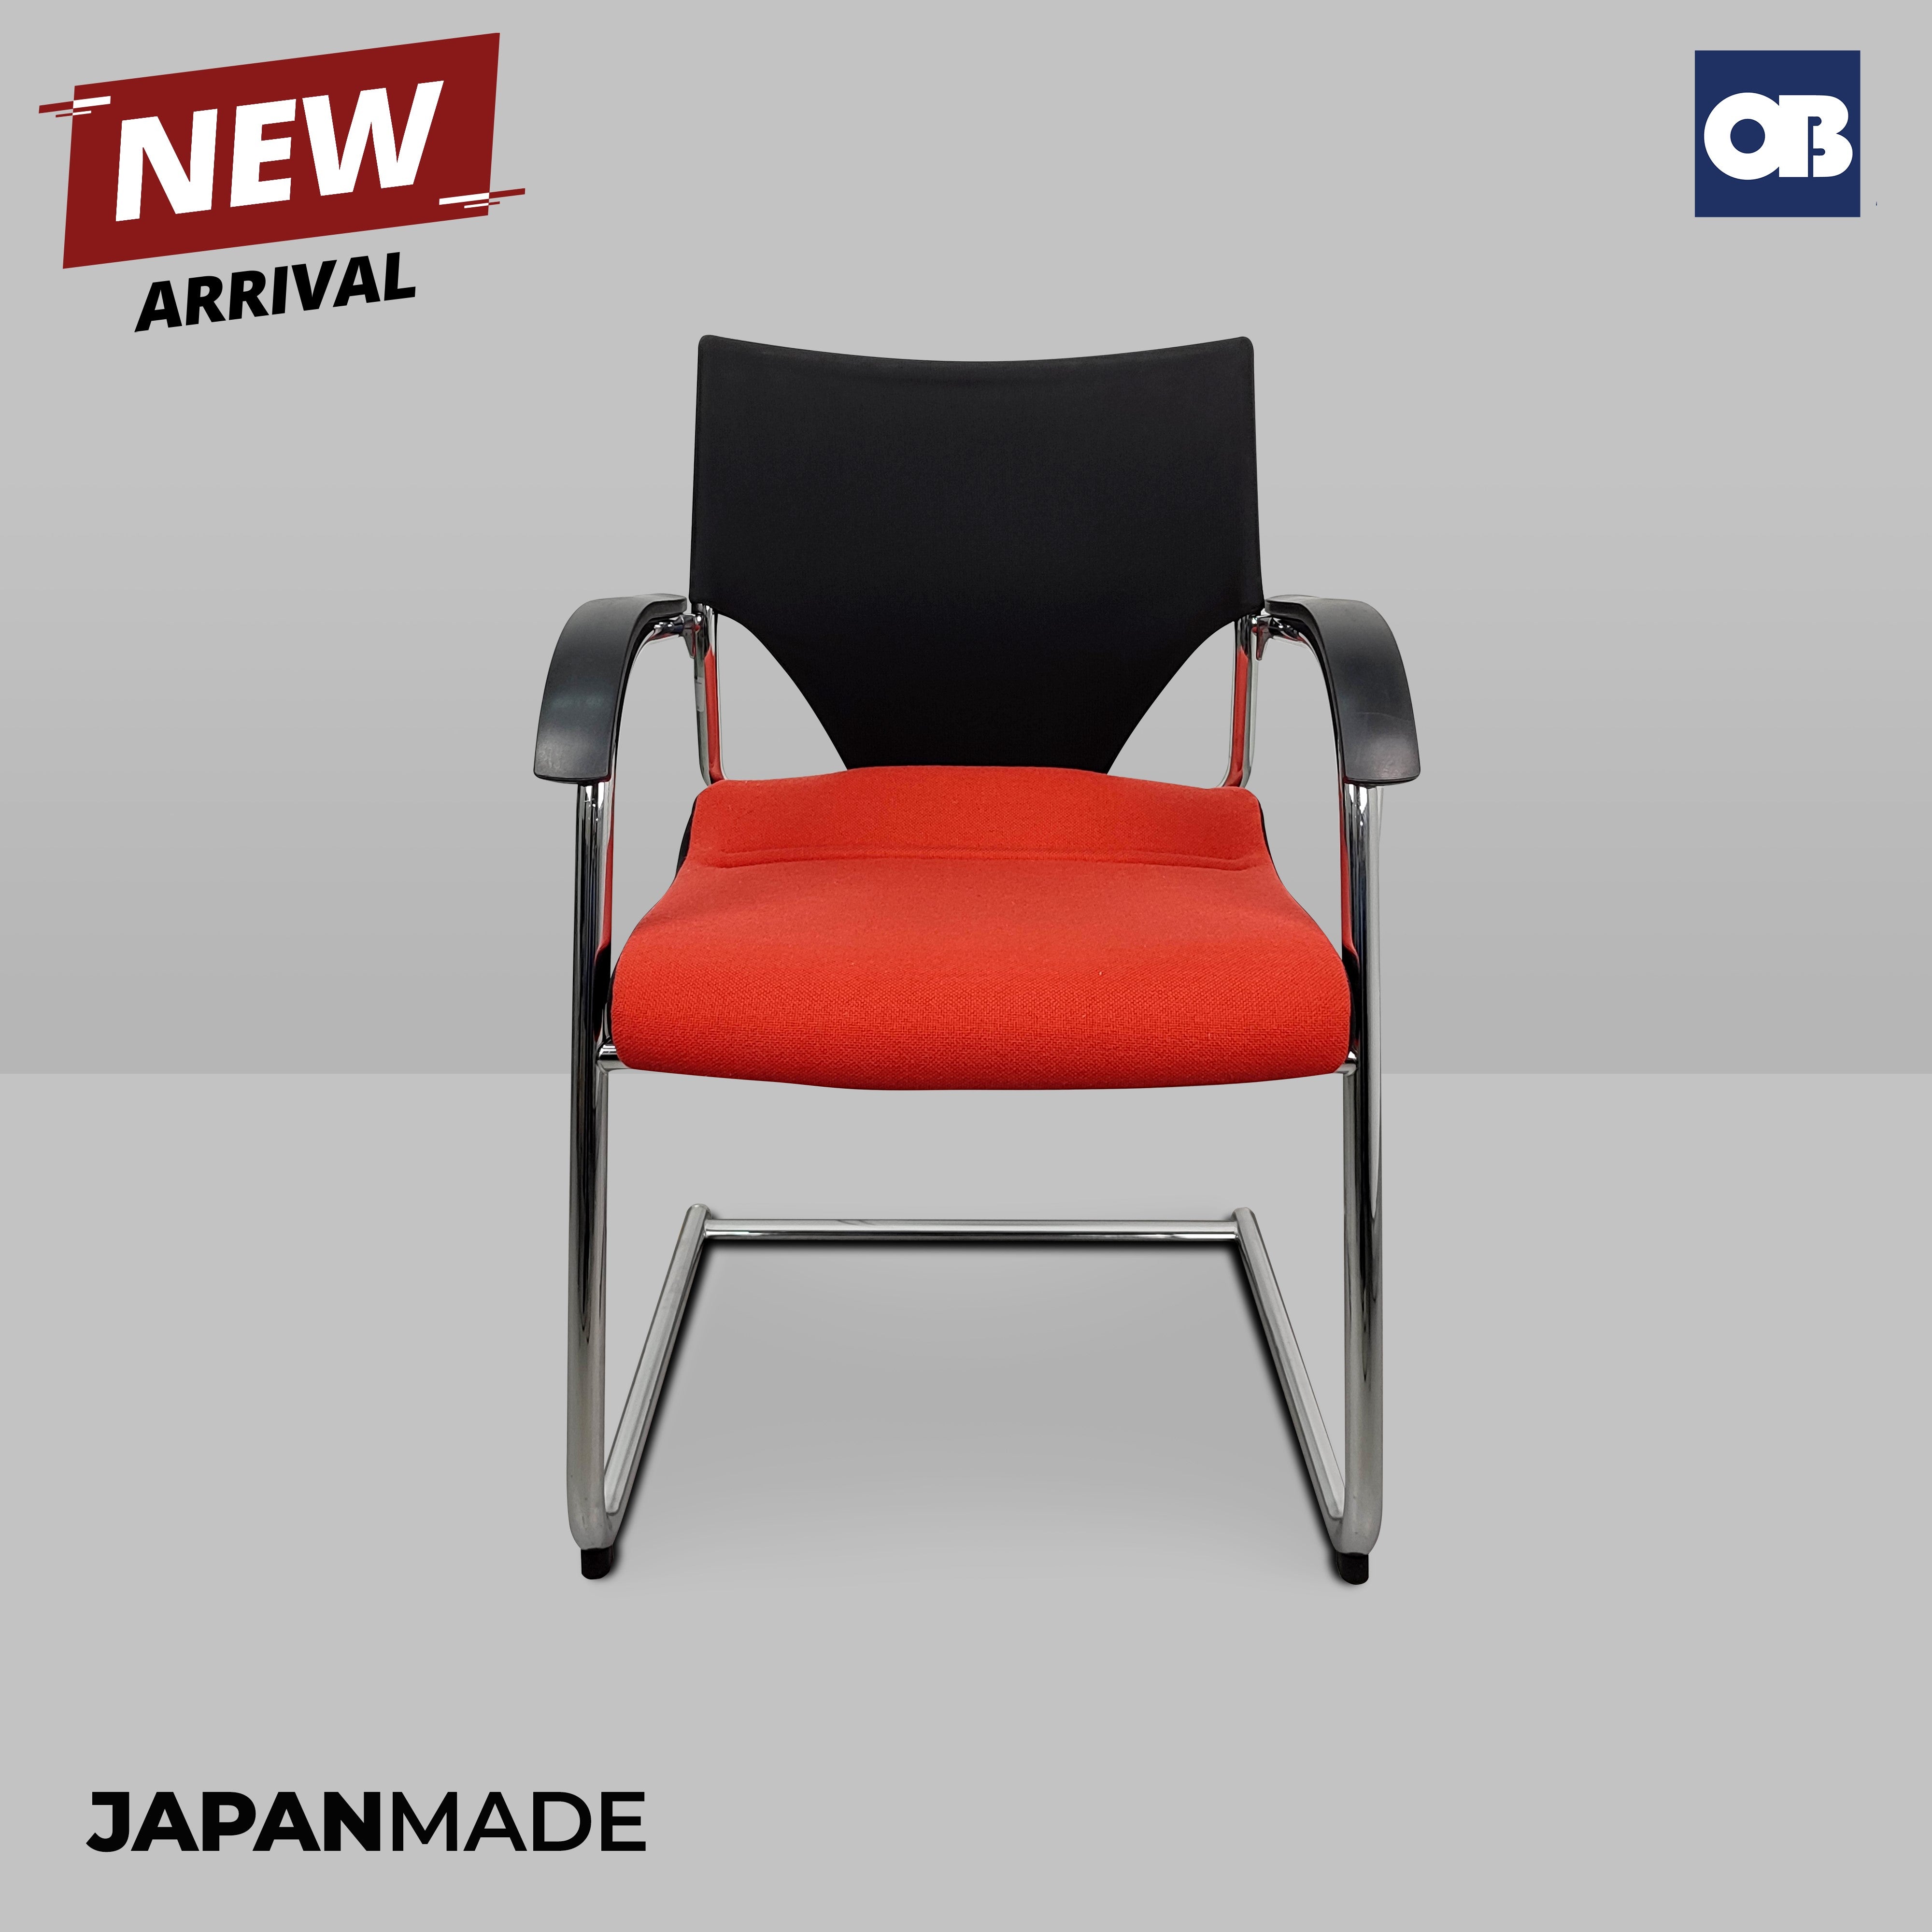 Japan Meeting Chair